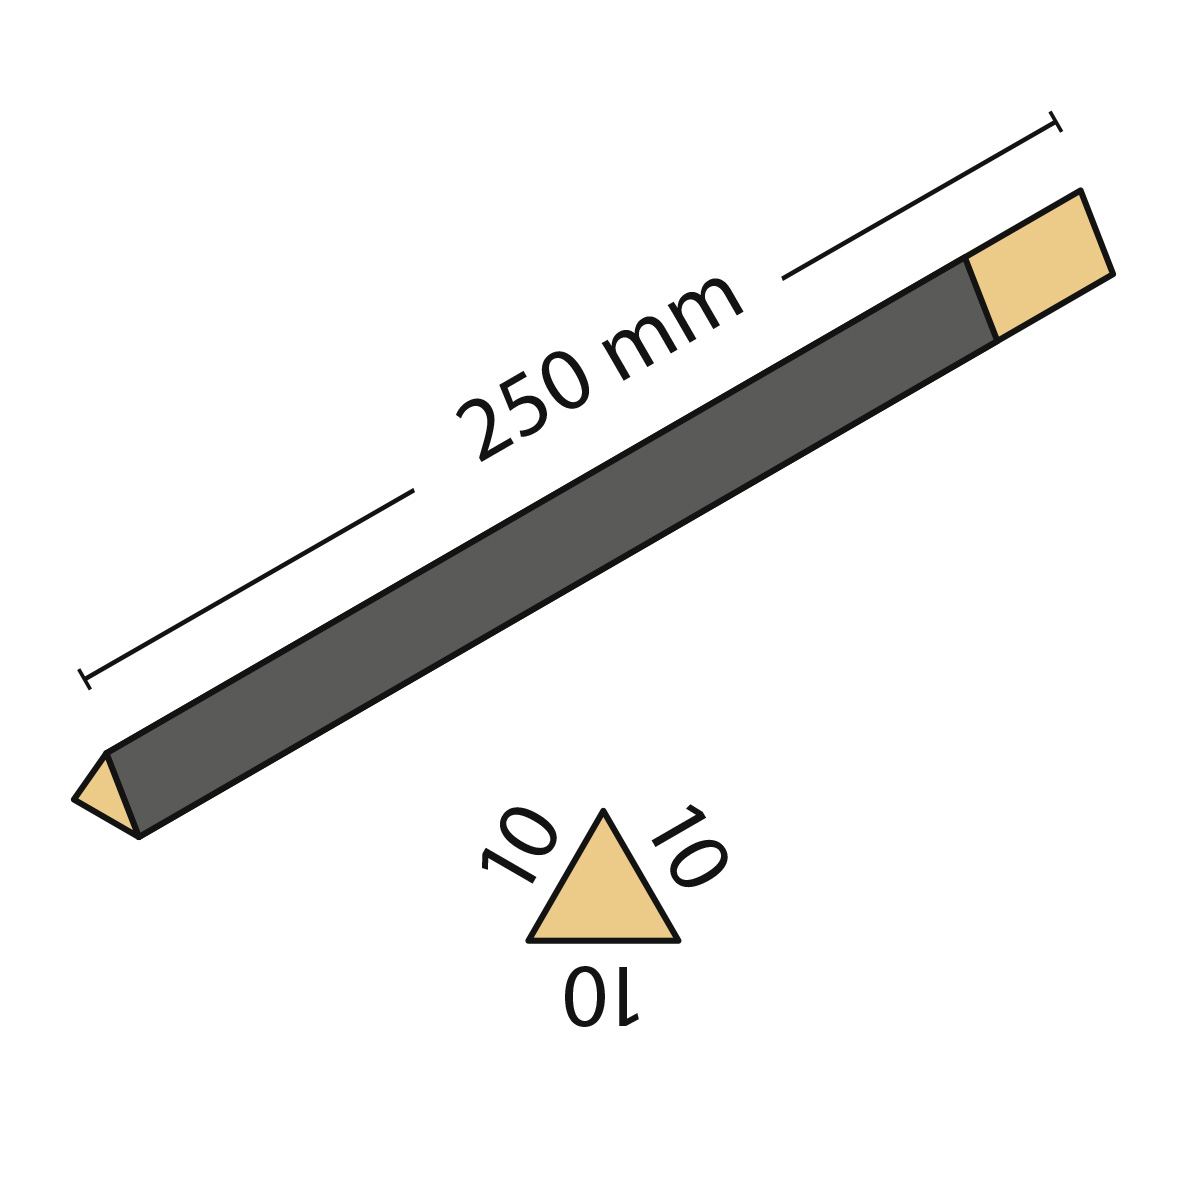 Cabron d'émeri triangulaire, longueur 250 mm, fin, grain 120